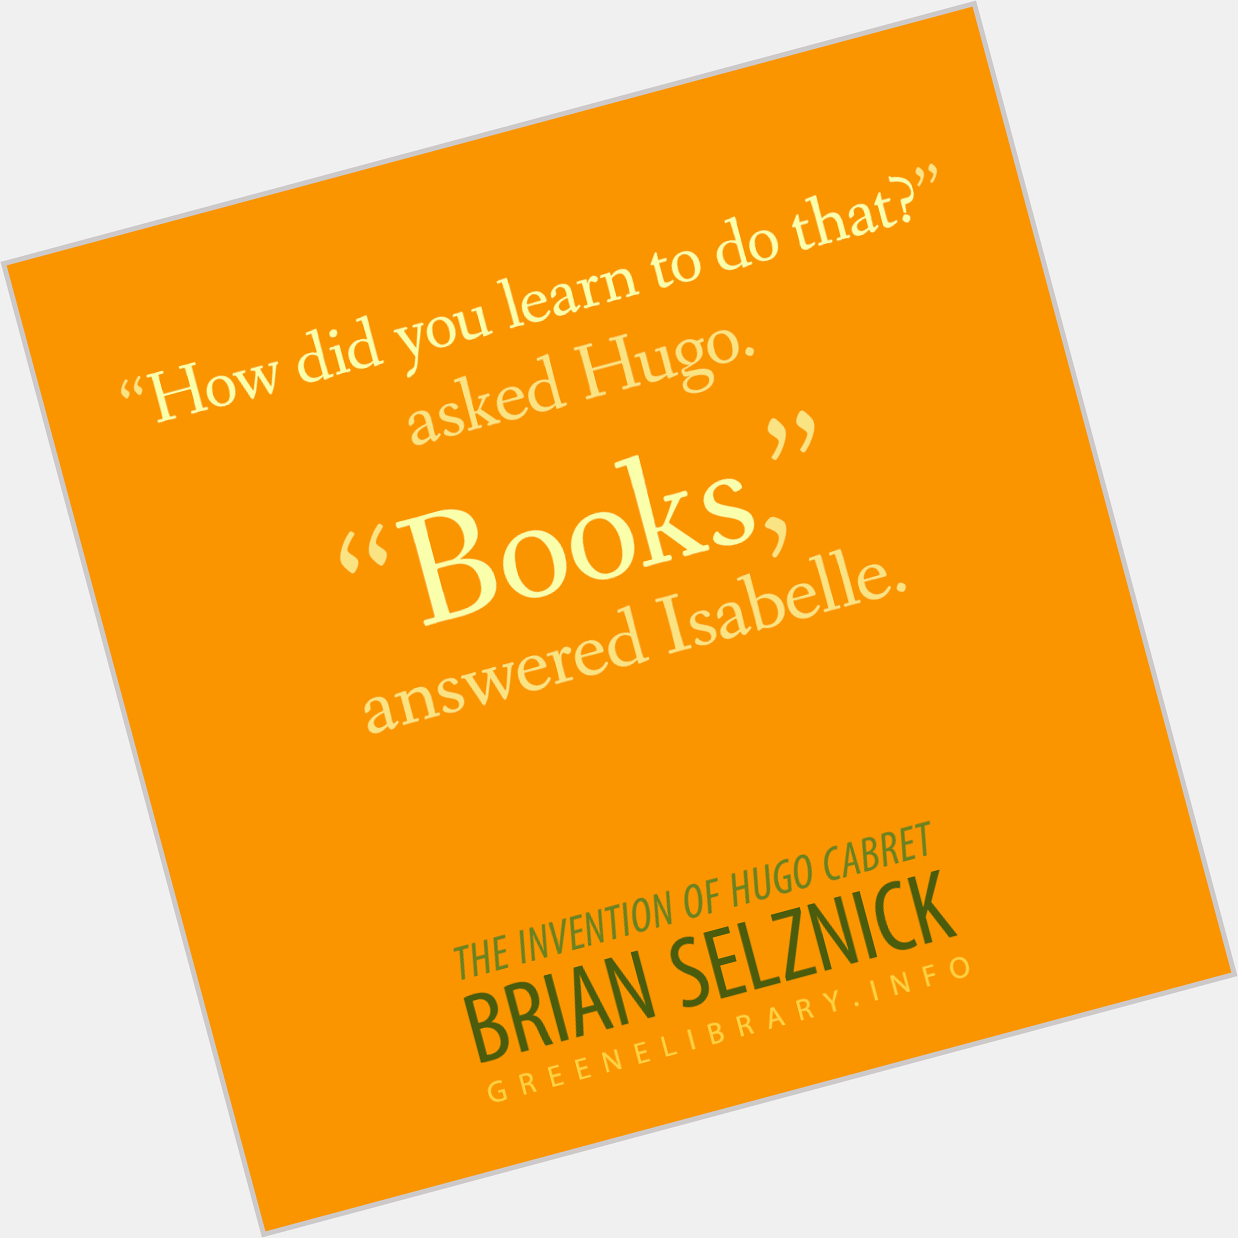 Happy birthday to author and illustrator Brian Selznick.  